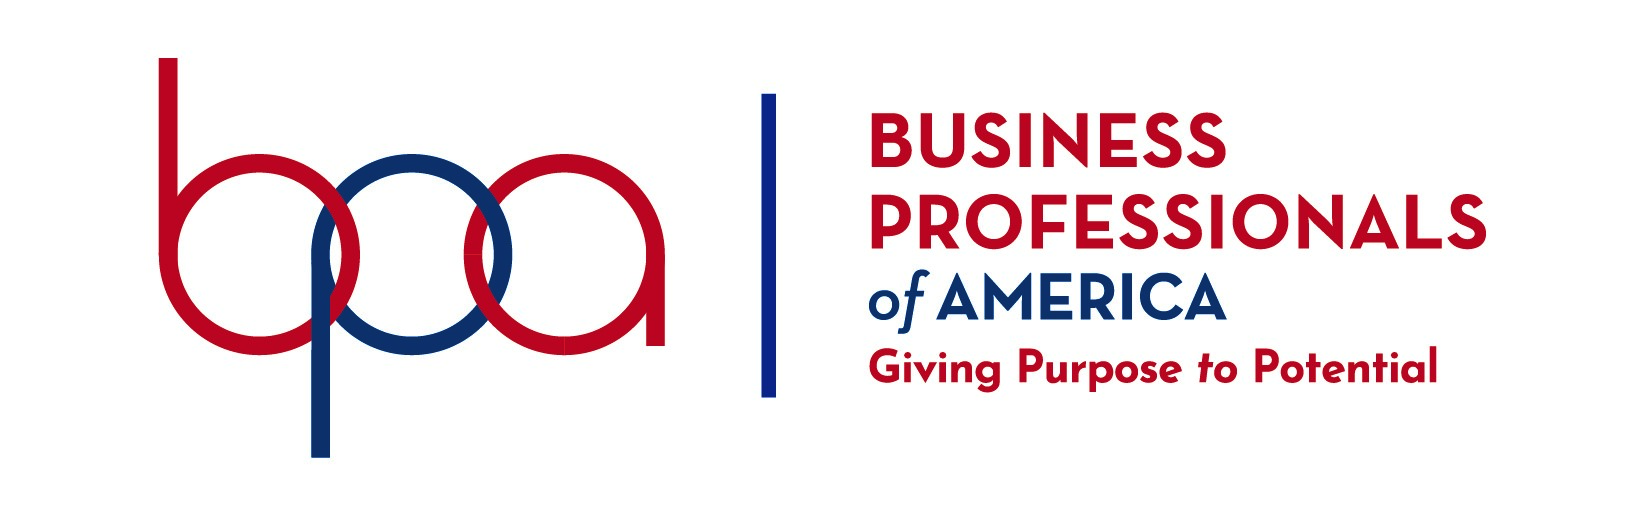 Business Professionals of America logo